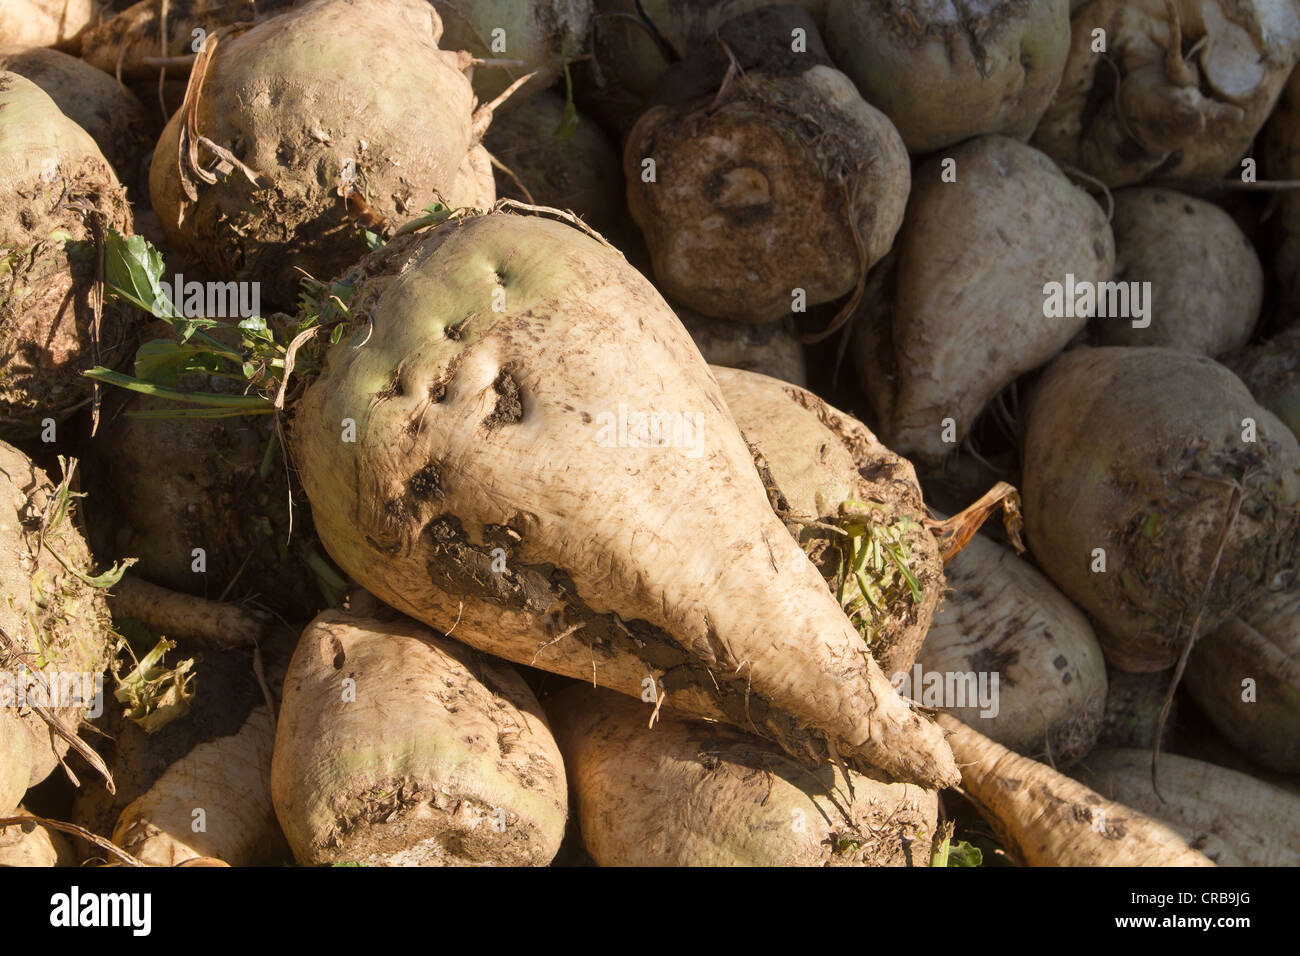 Sugar beet (Beta vulgaris var. altissima) Stock Photo